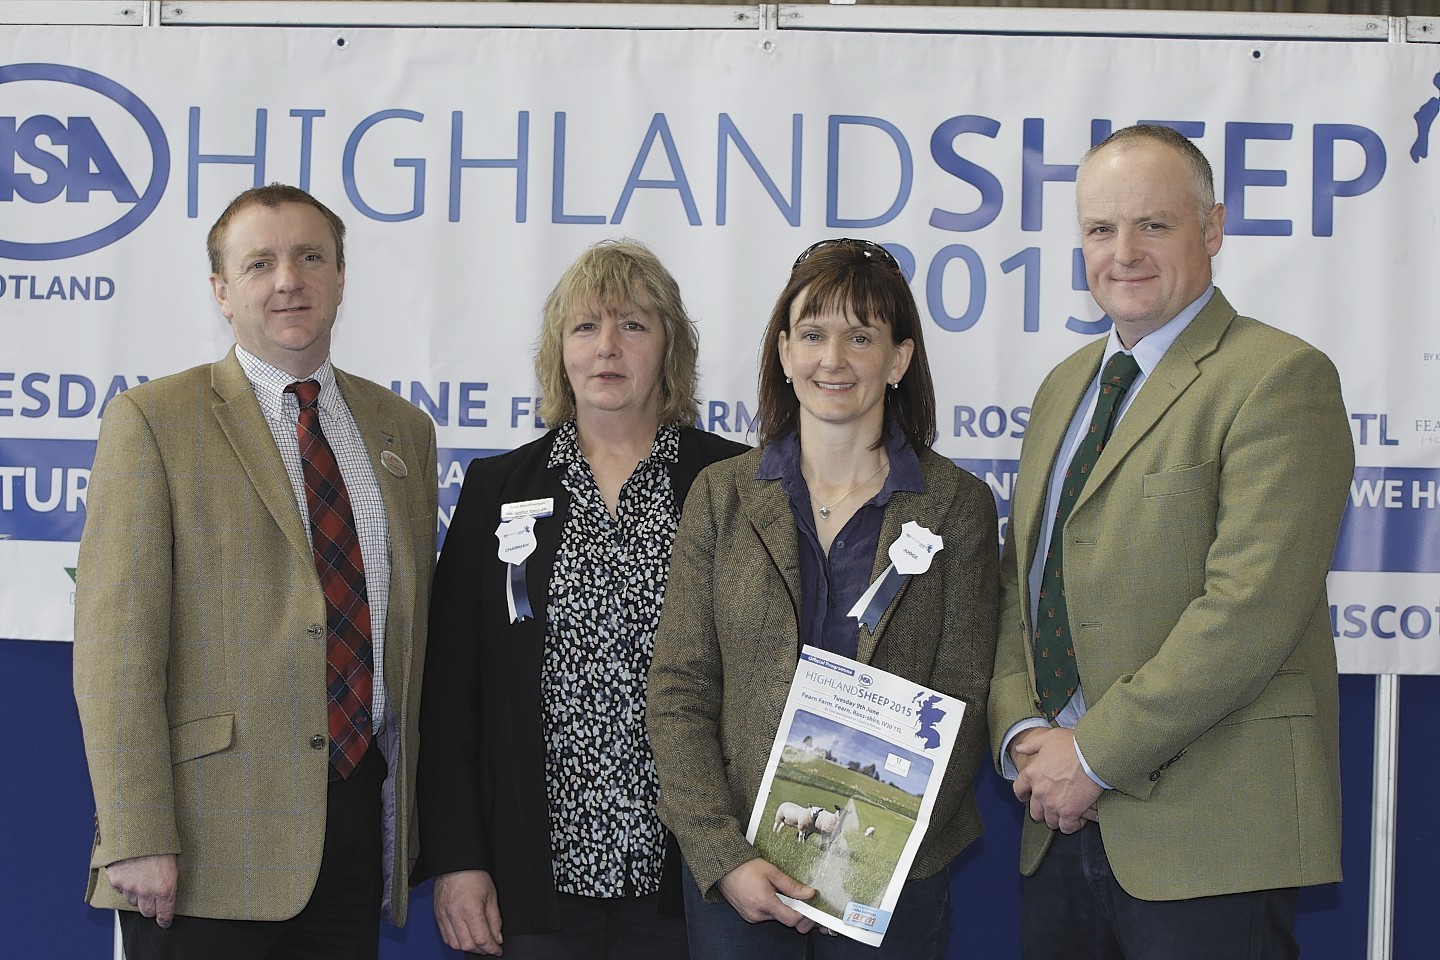 Jim McLaren, NSA Scotland chair Sybil Macpherson and Highland Sheep host farmers Fiona and John Scott